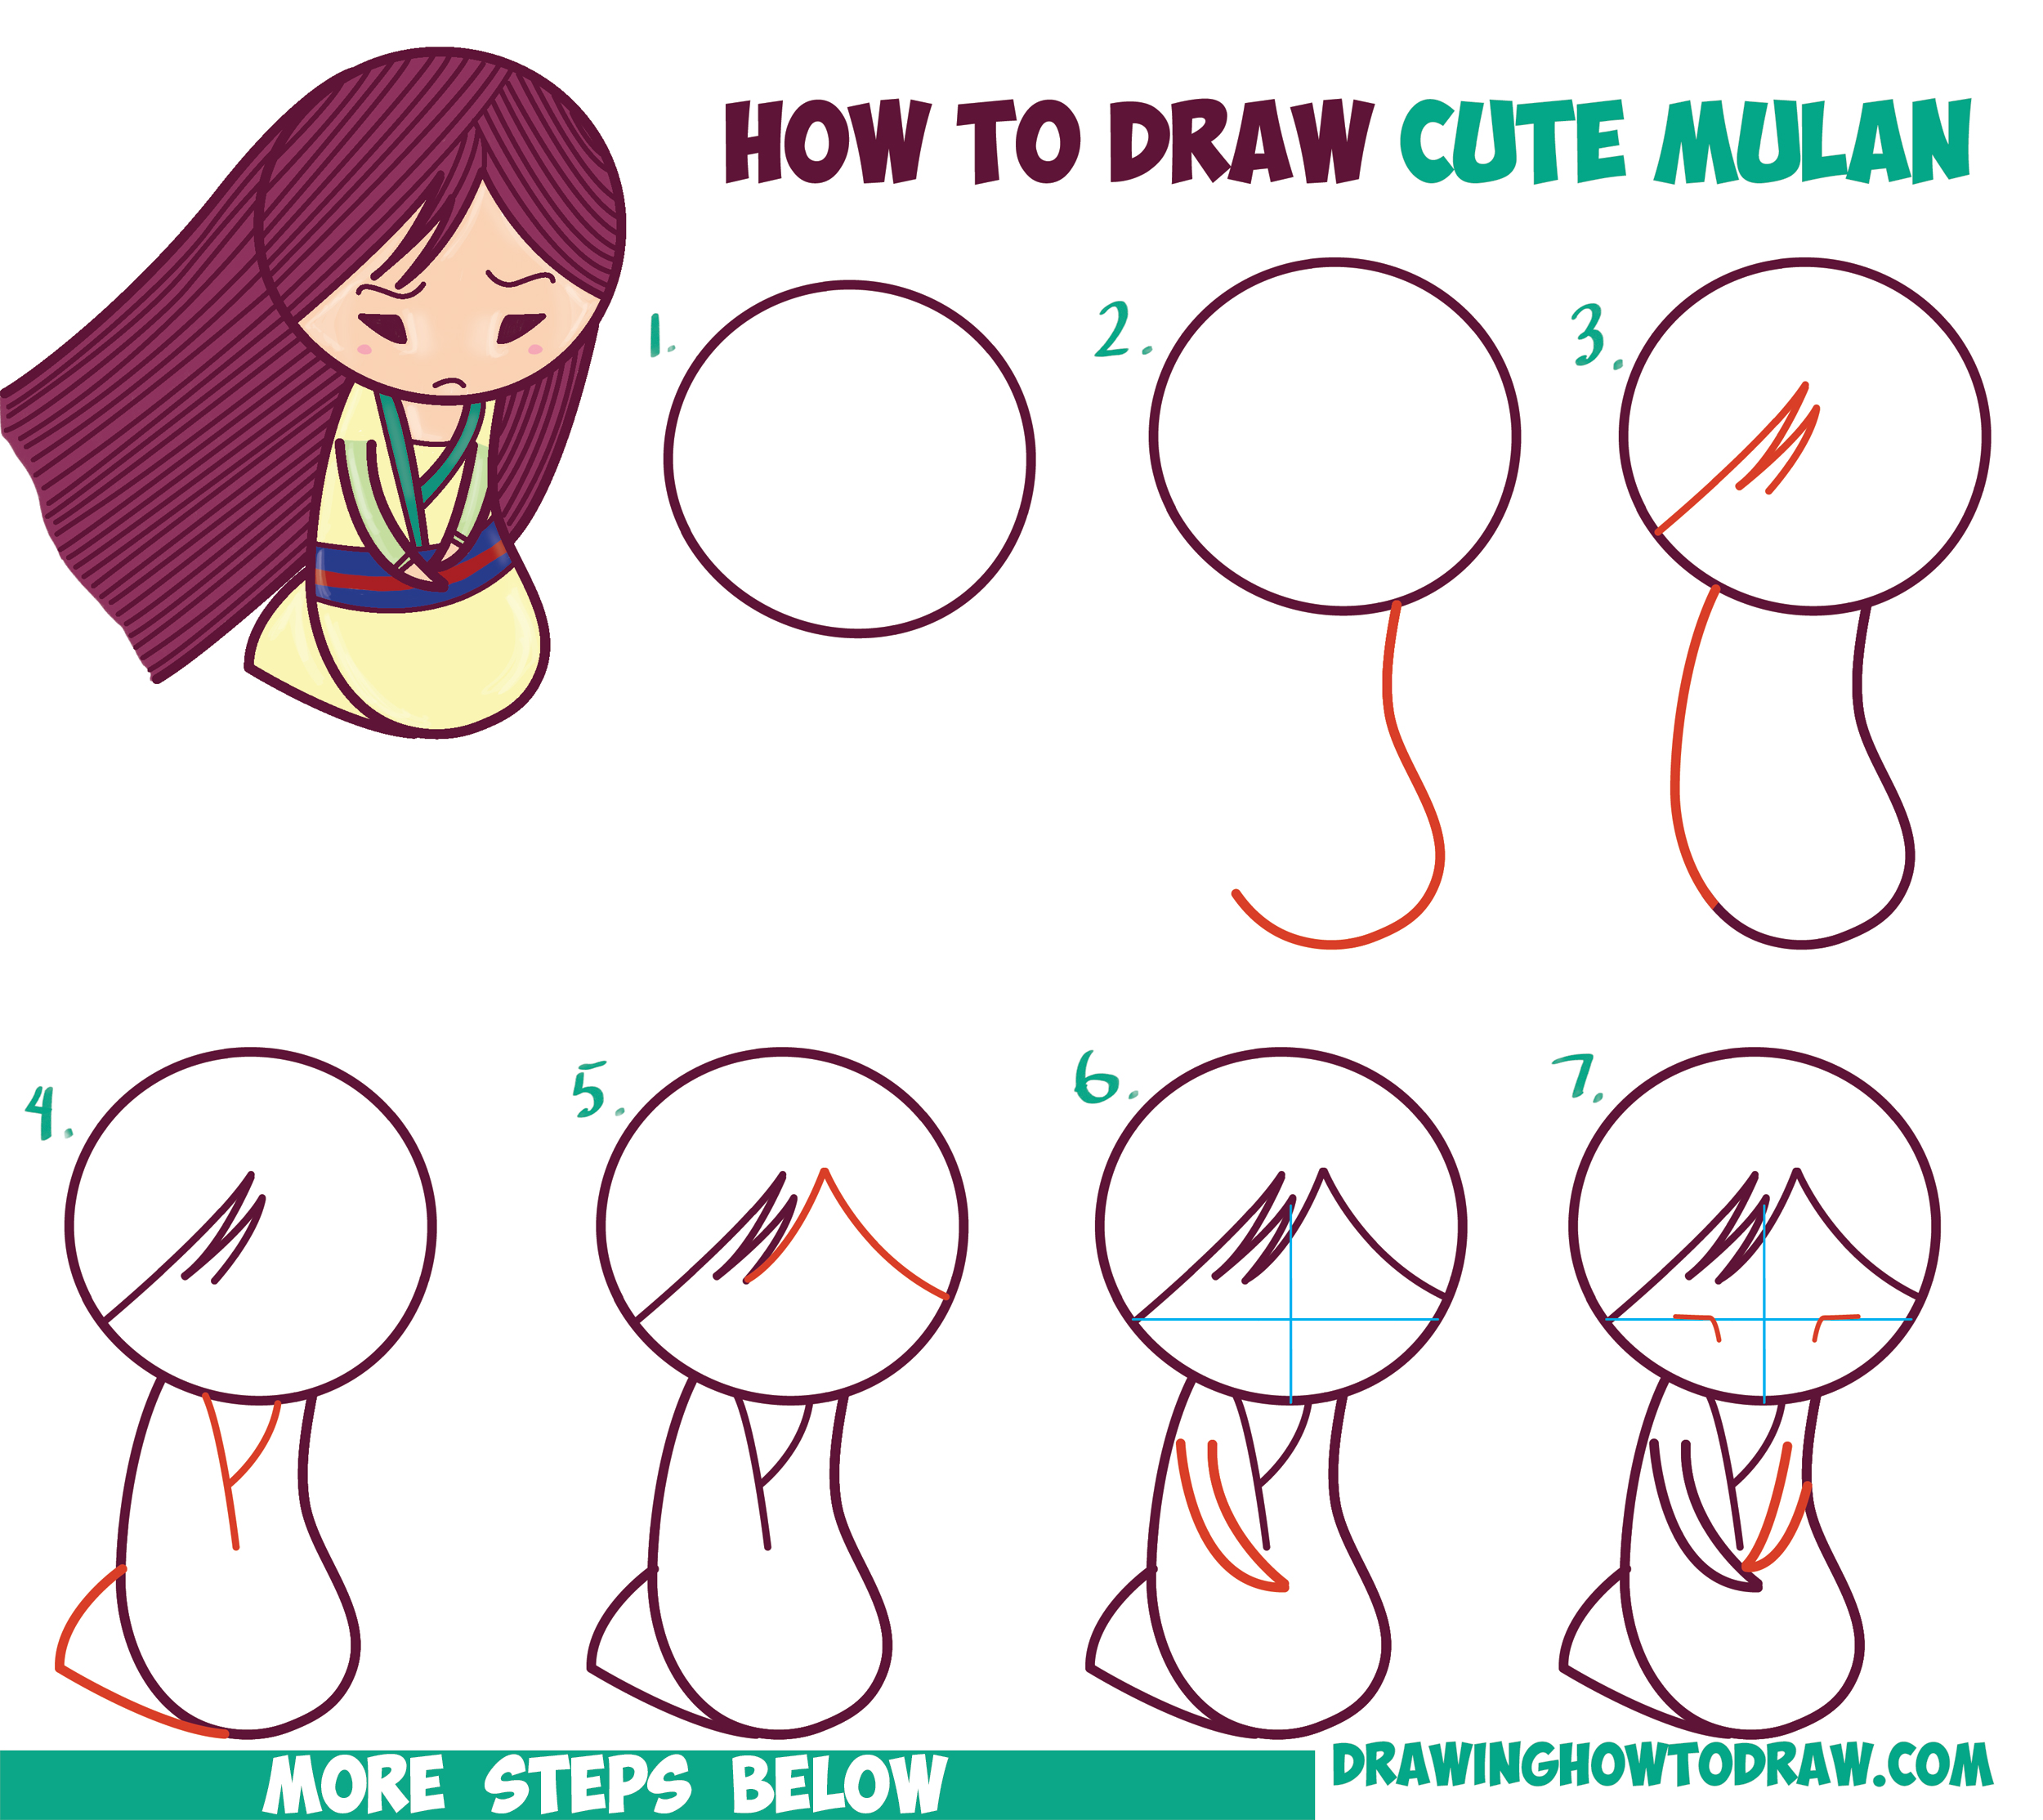 How to Draw Cute Kawaii Chibi Mulan the Chinese Disney Princess - Easy